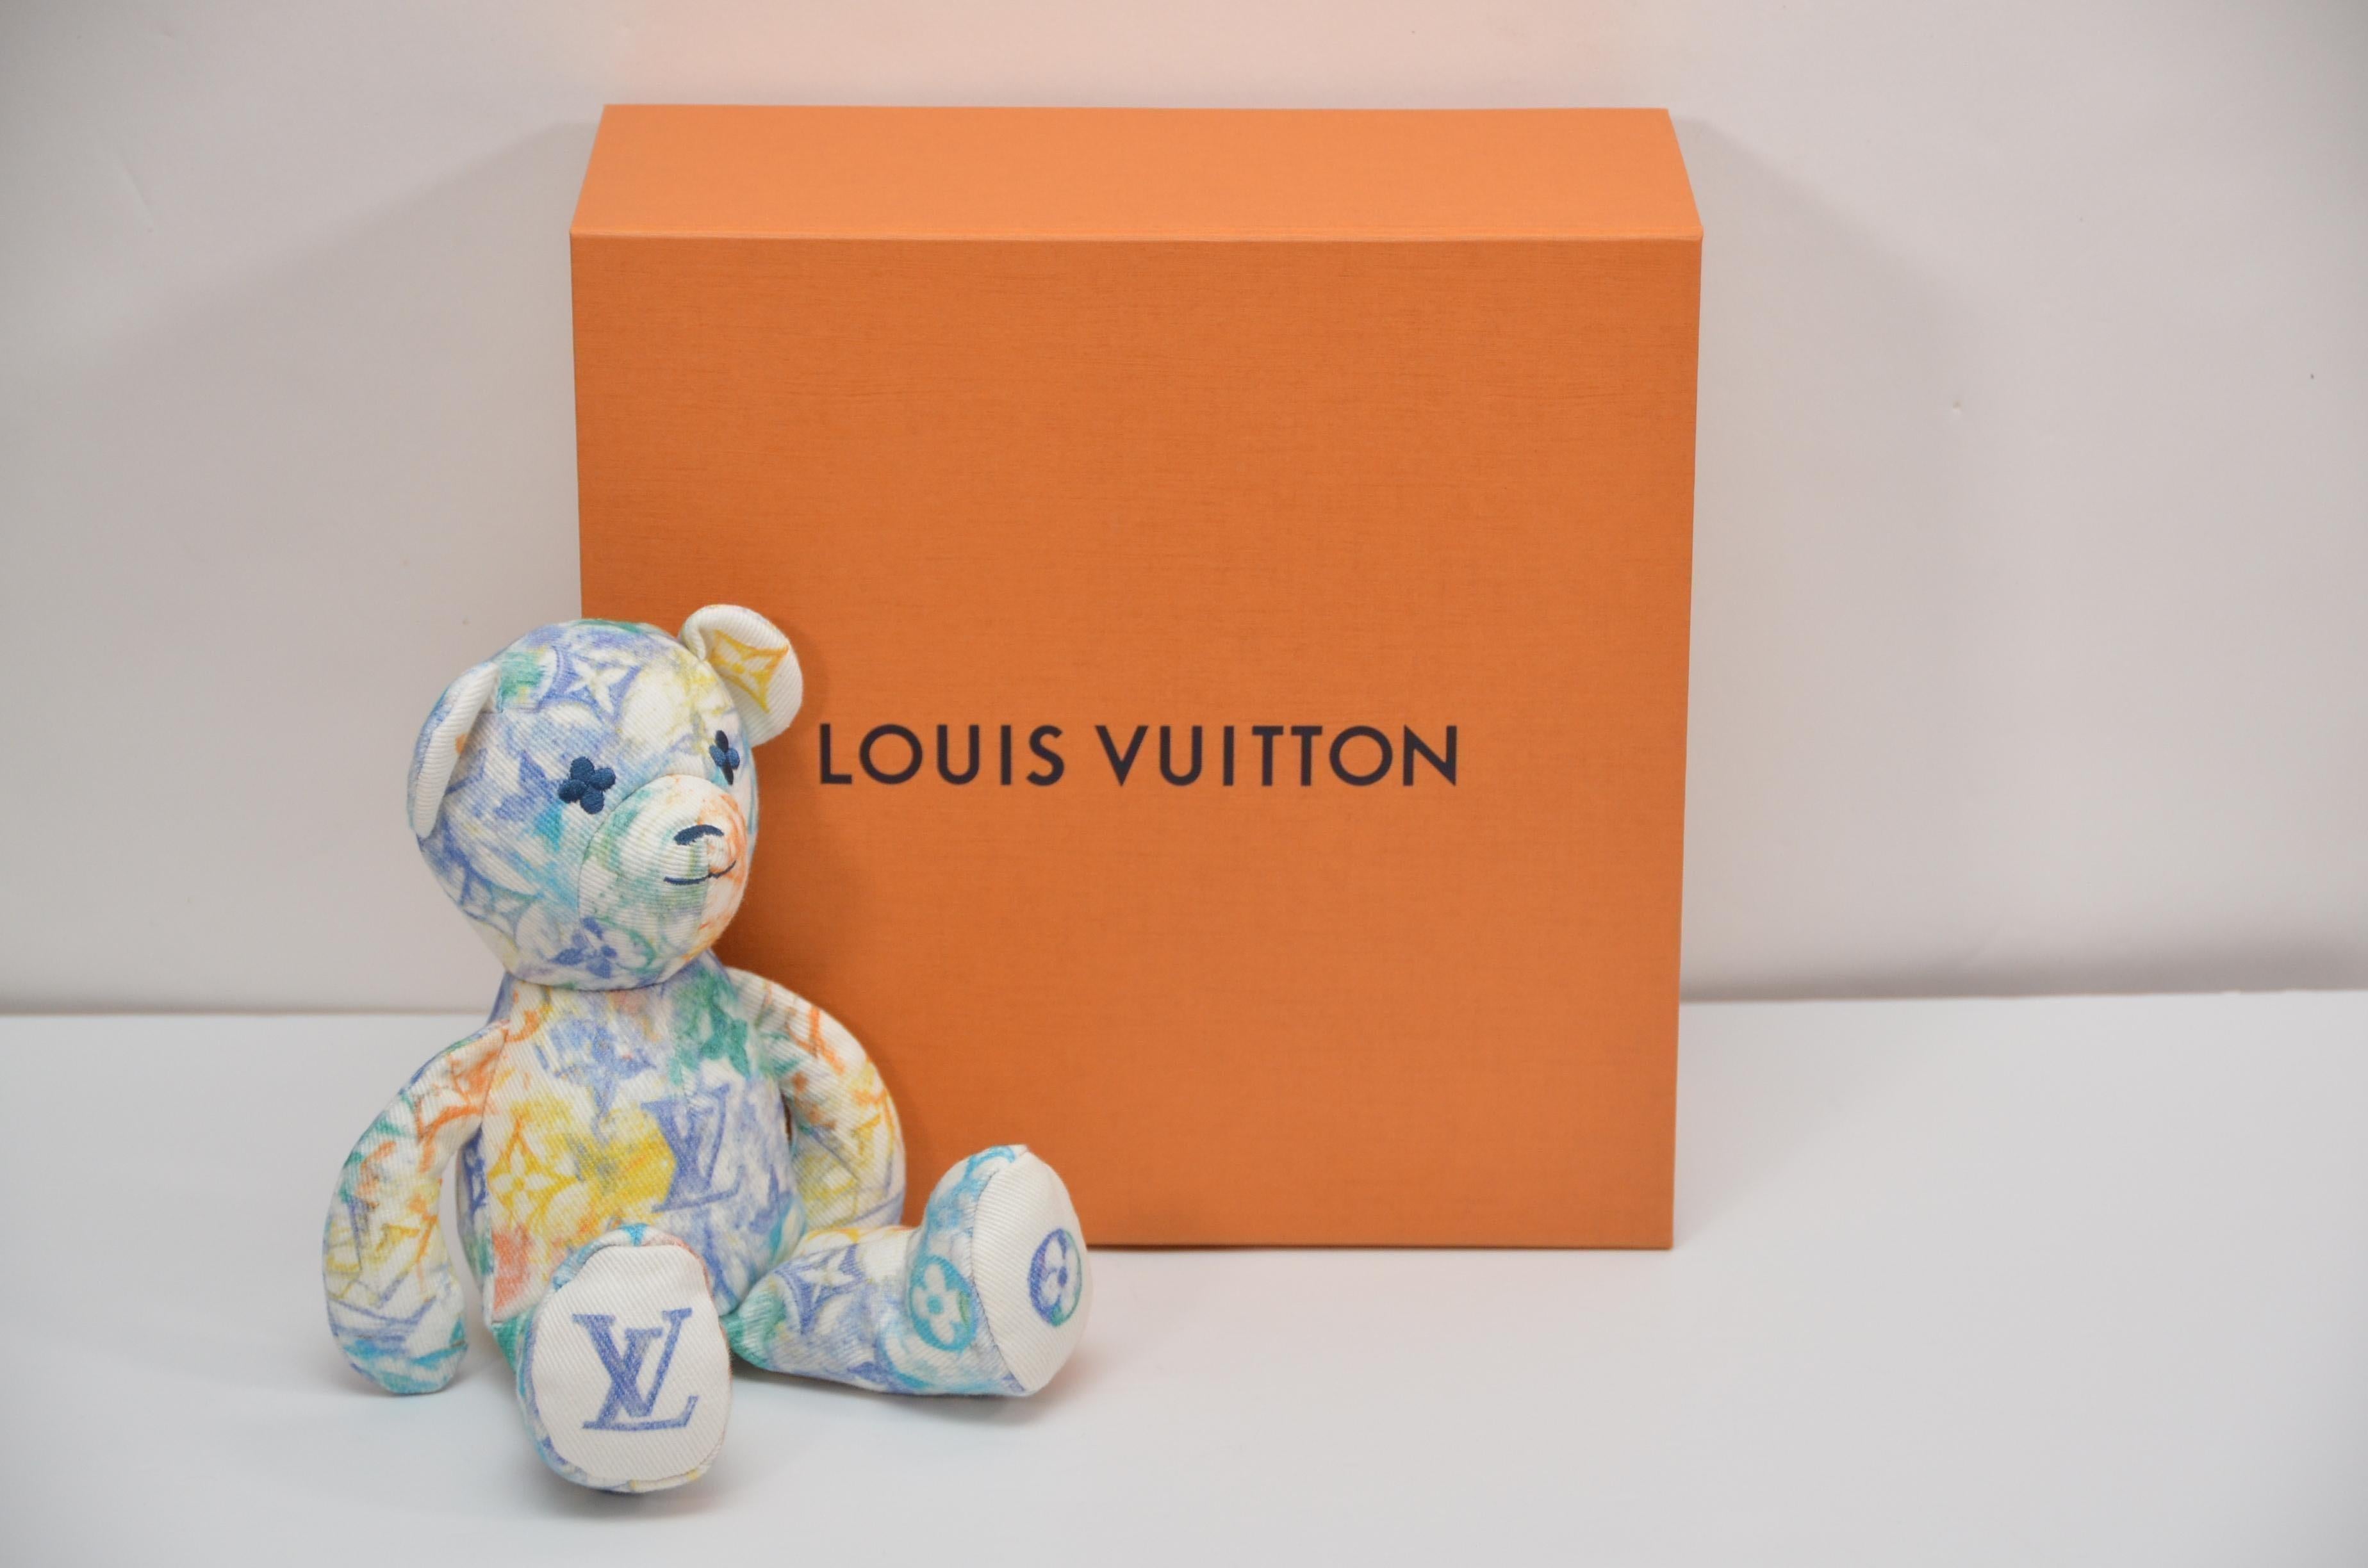 Steiff Louis Vuitton Teddy Bear Crossword Puzzles